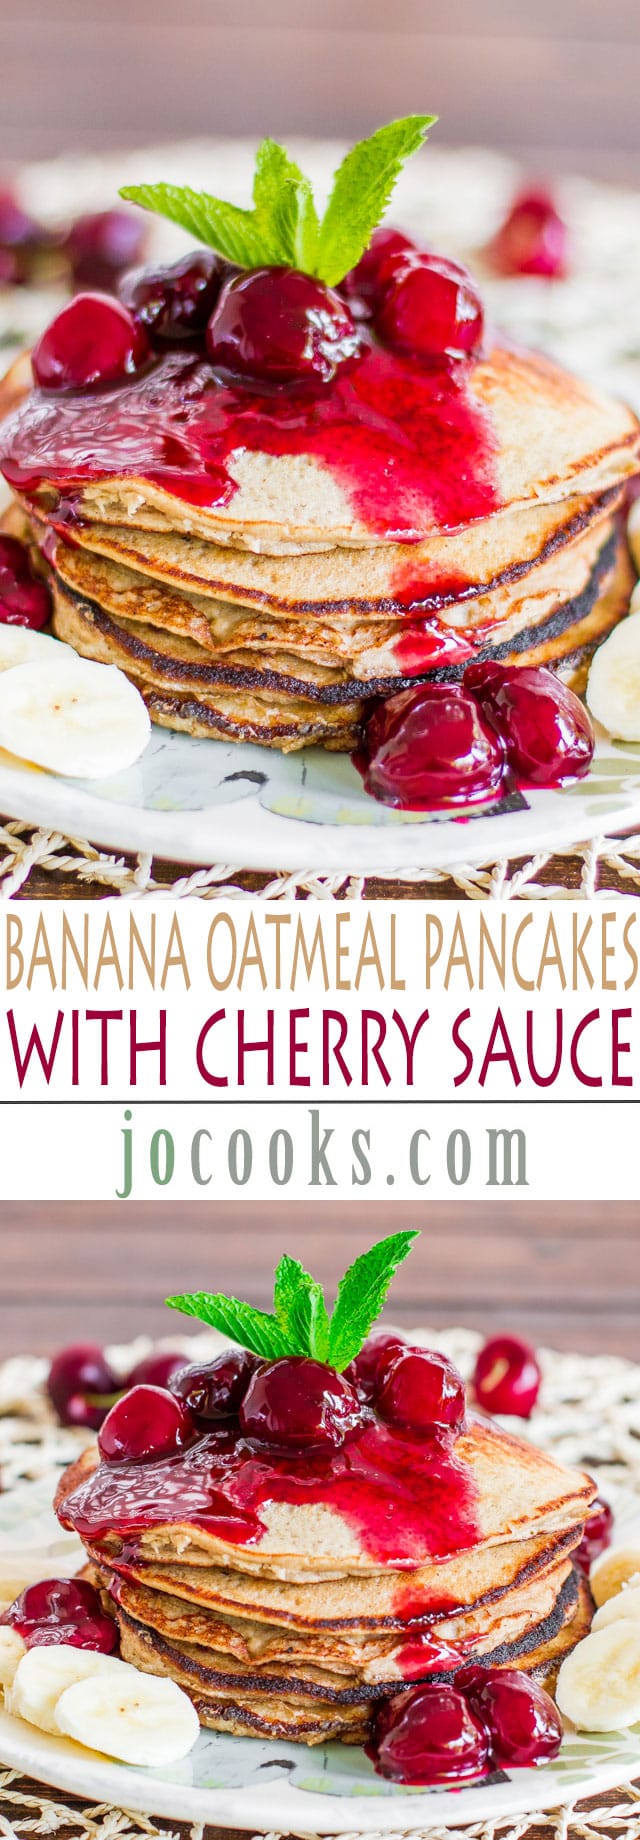 banana-oatmeal-pancakes-with-fresh-cherry-sauce-collage